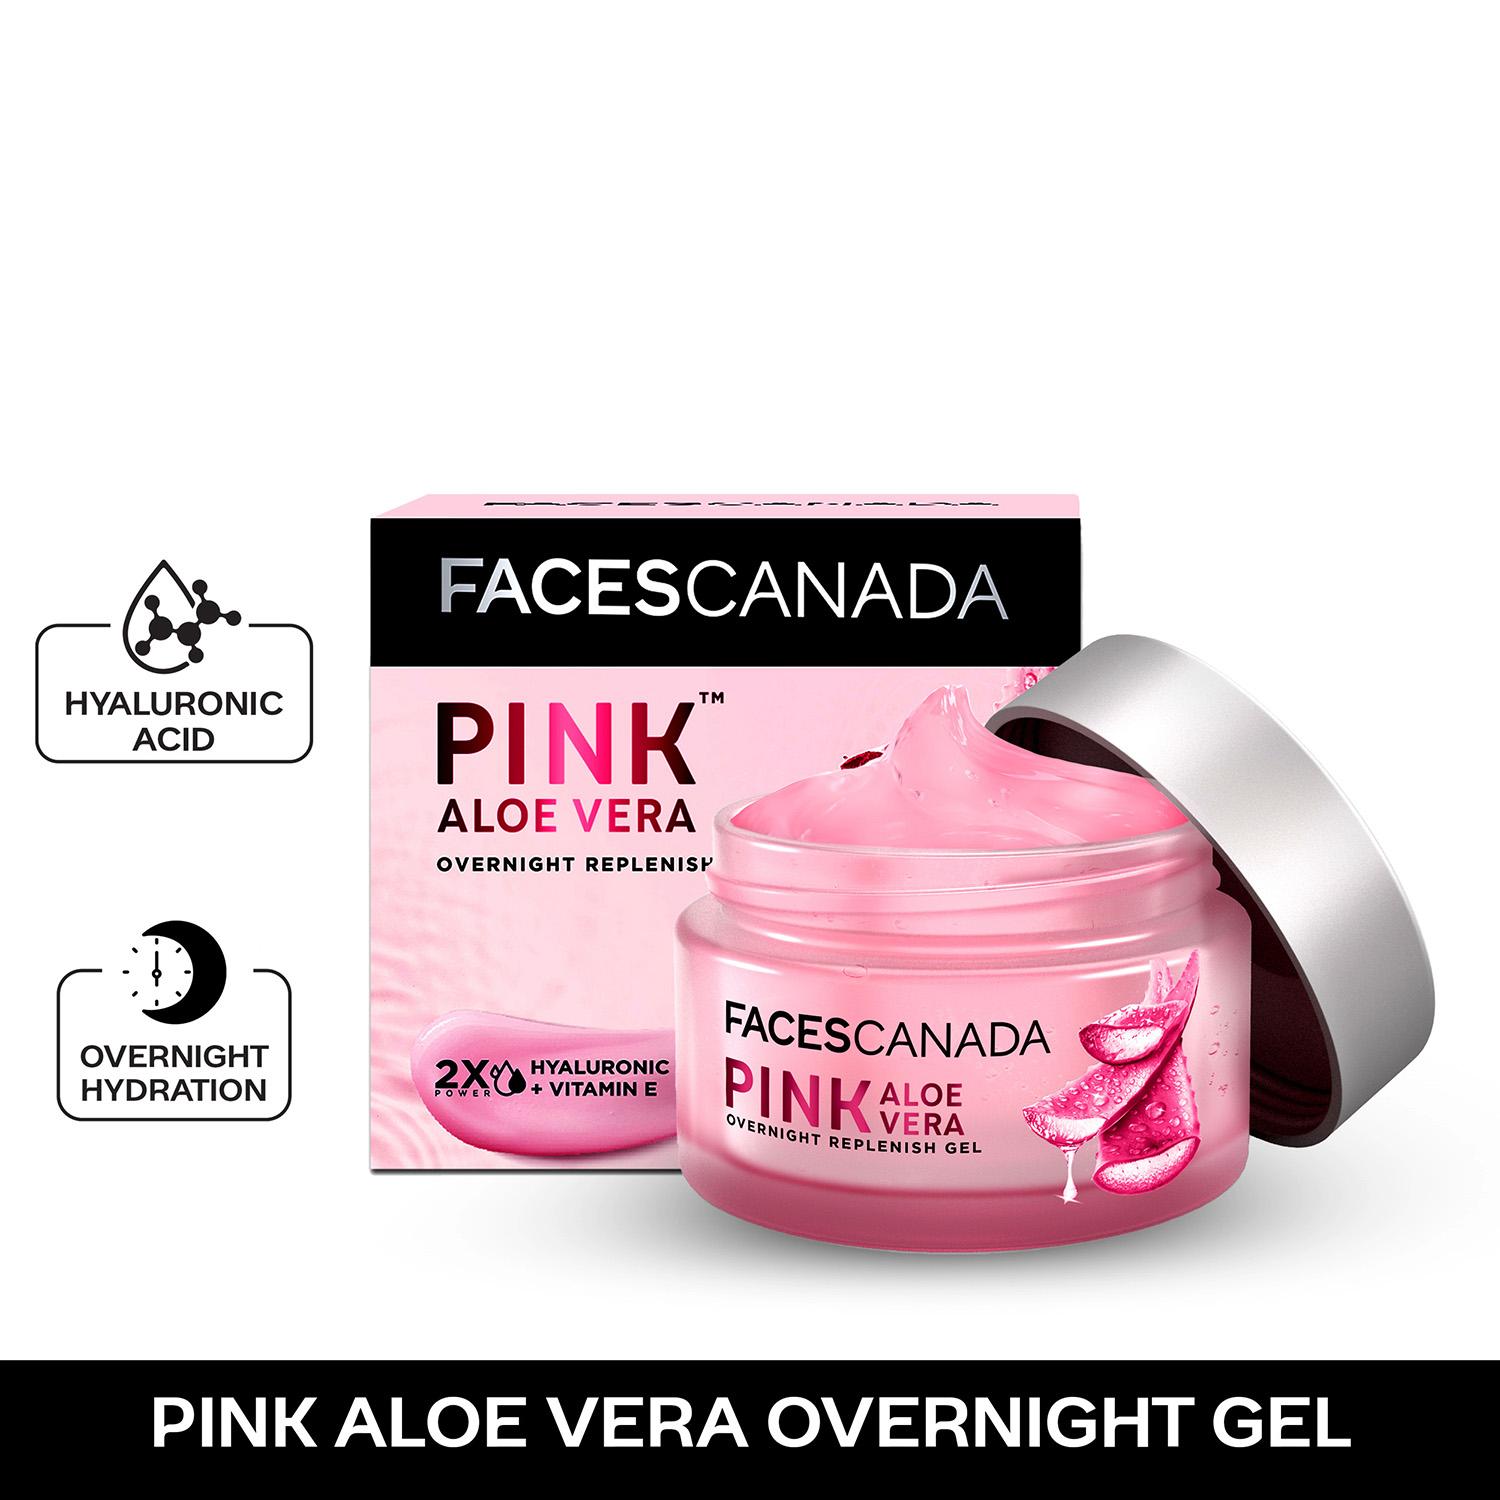 Faces Canada | Faces Canada Pink Aloe Vera Overnight Replenish Gel, Anti-Ageing, Nourishing & Skin Tightening (50 g)